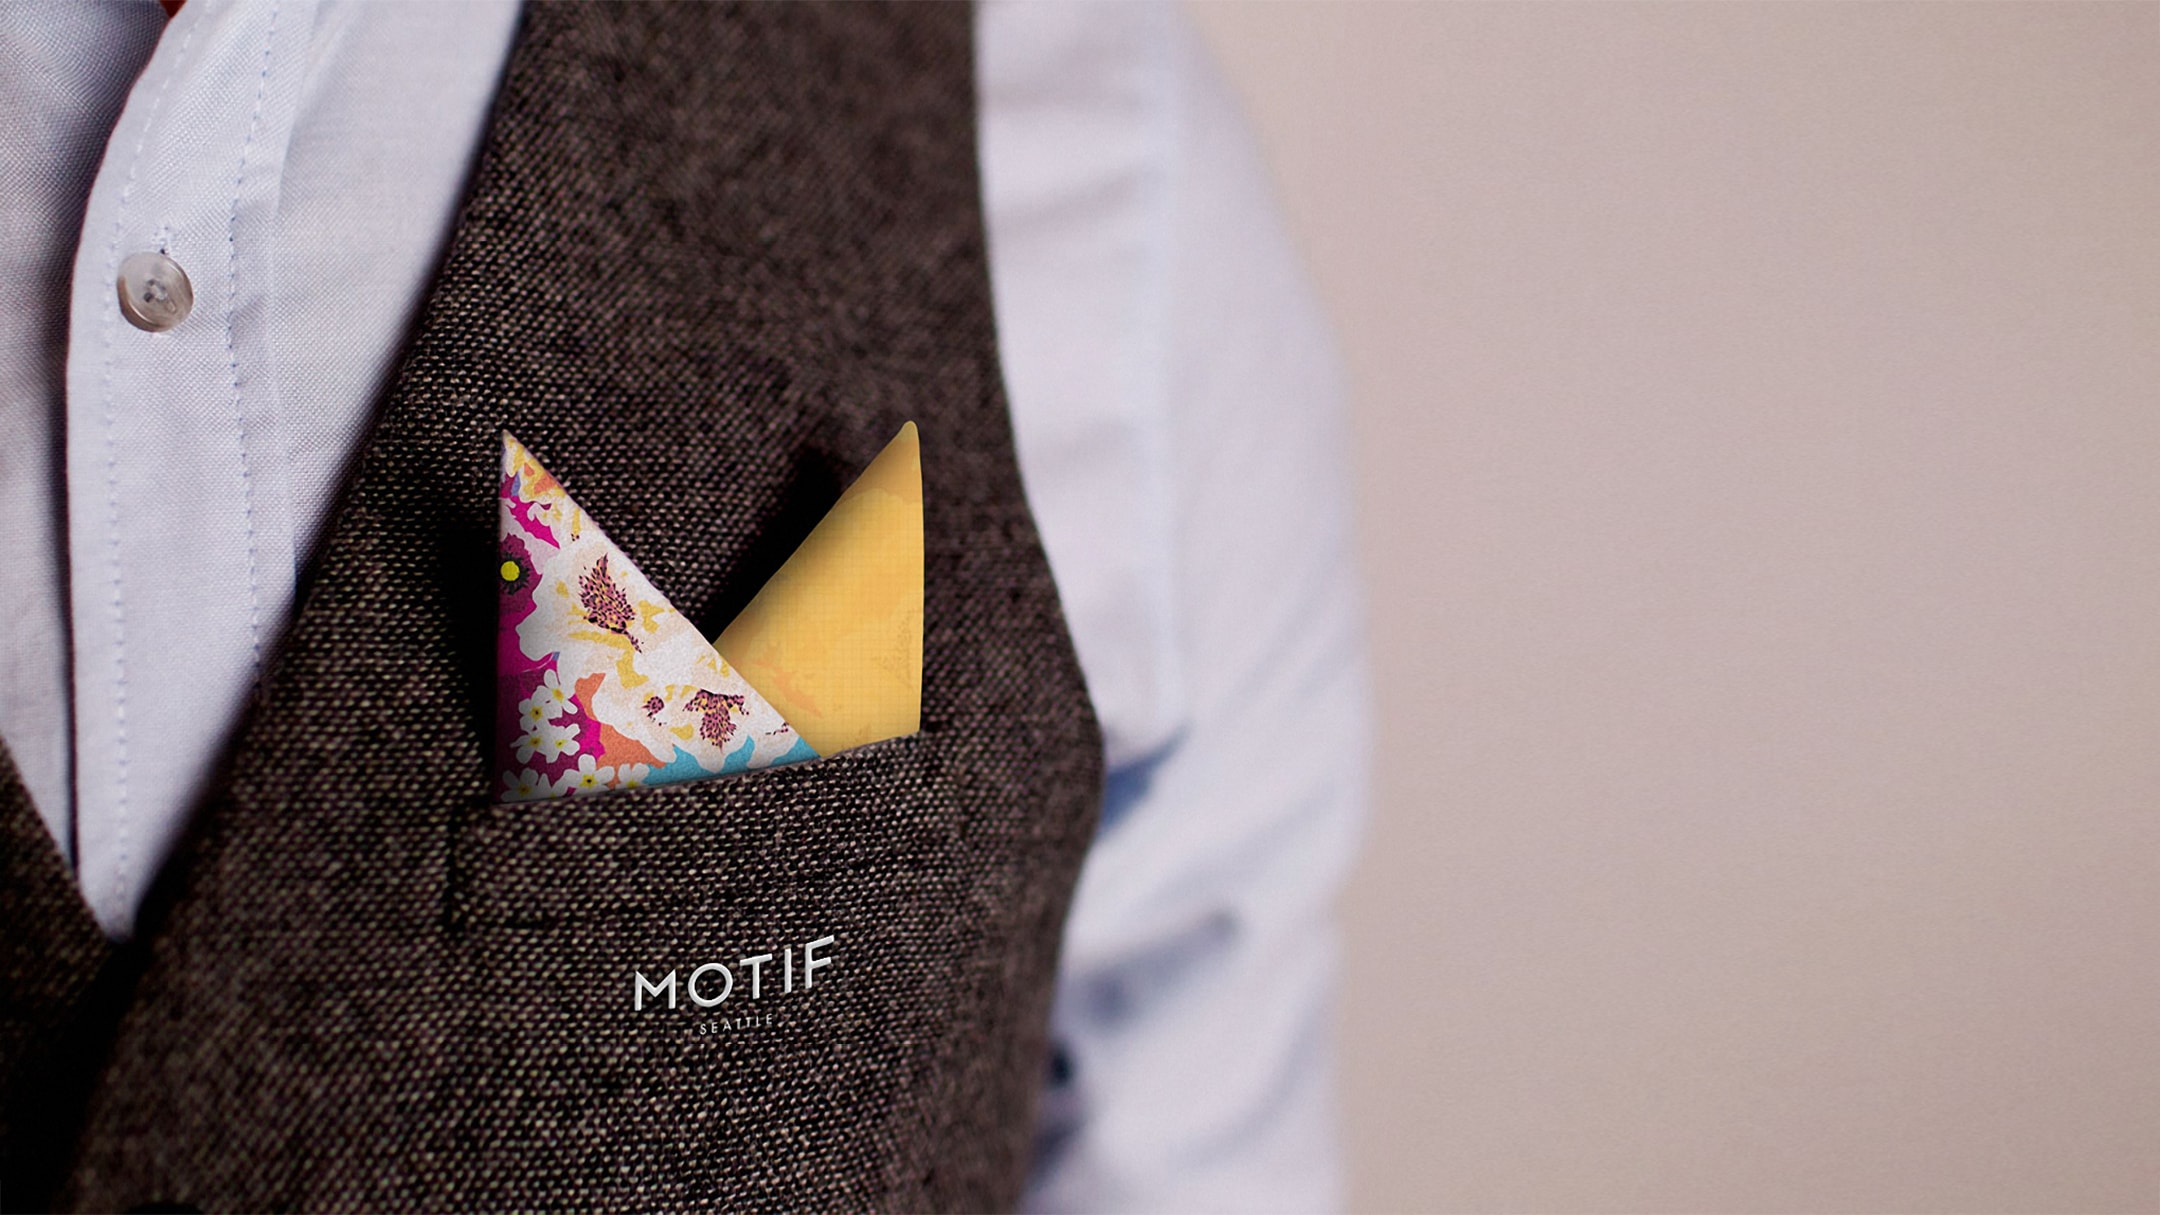 Motif Seattle pocket square - a hospitality branding element.